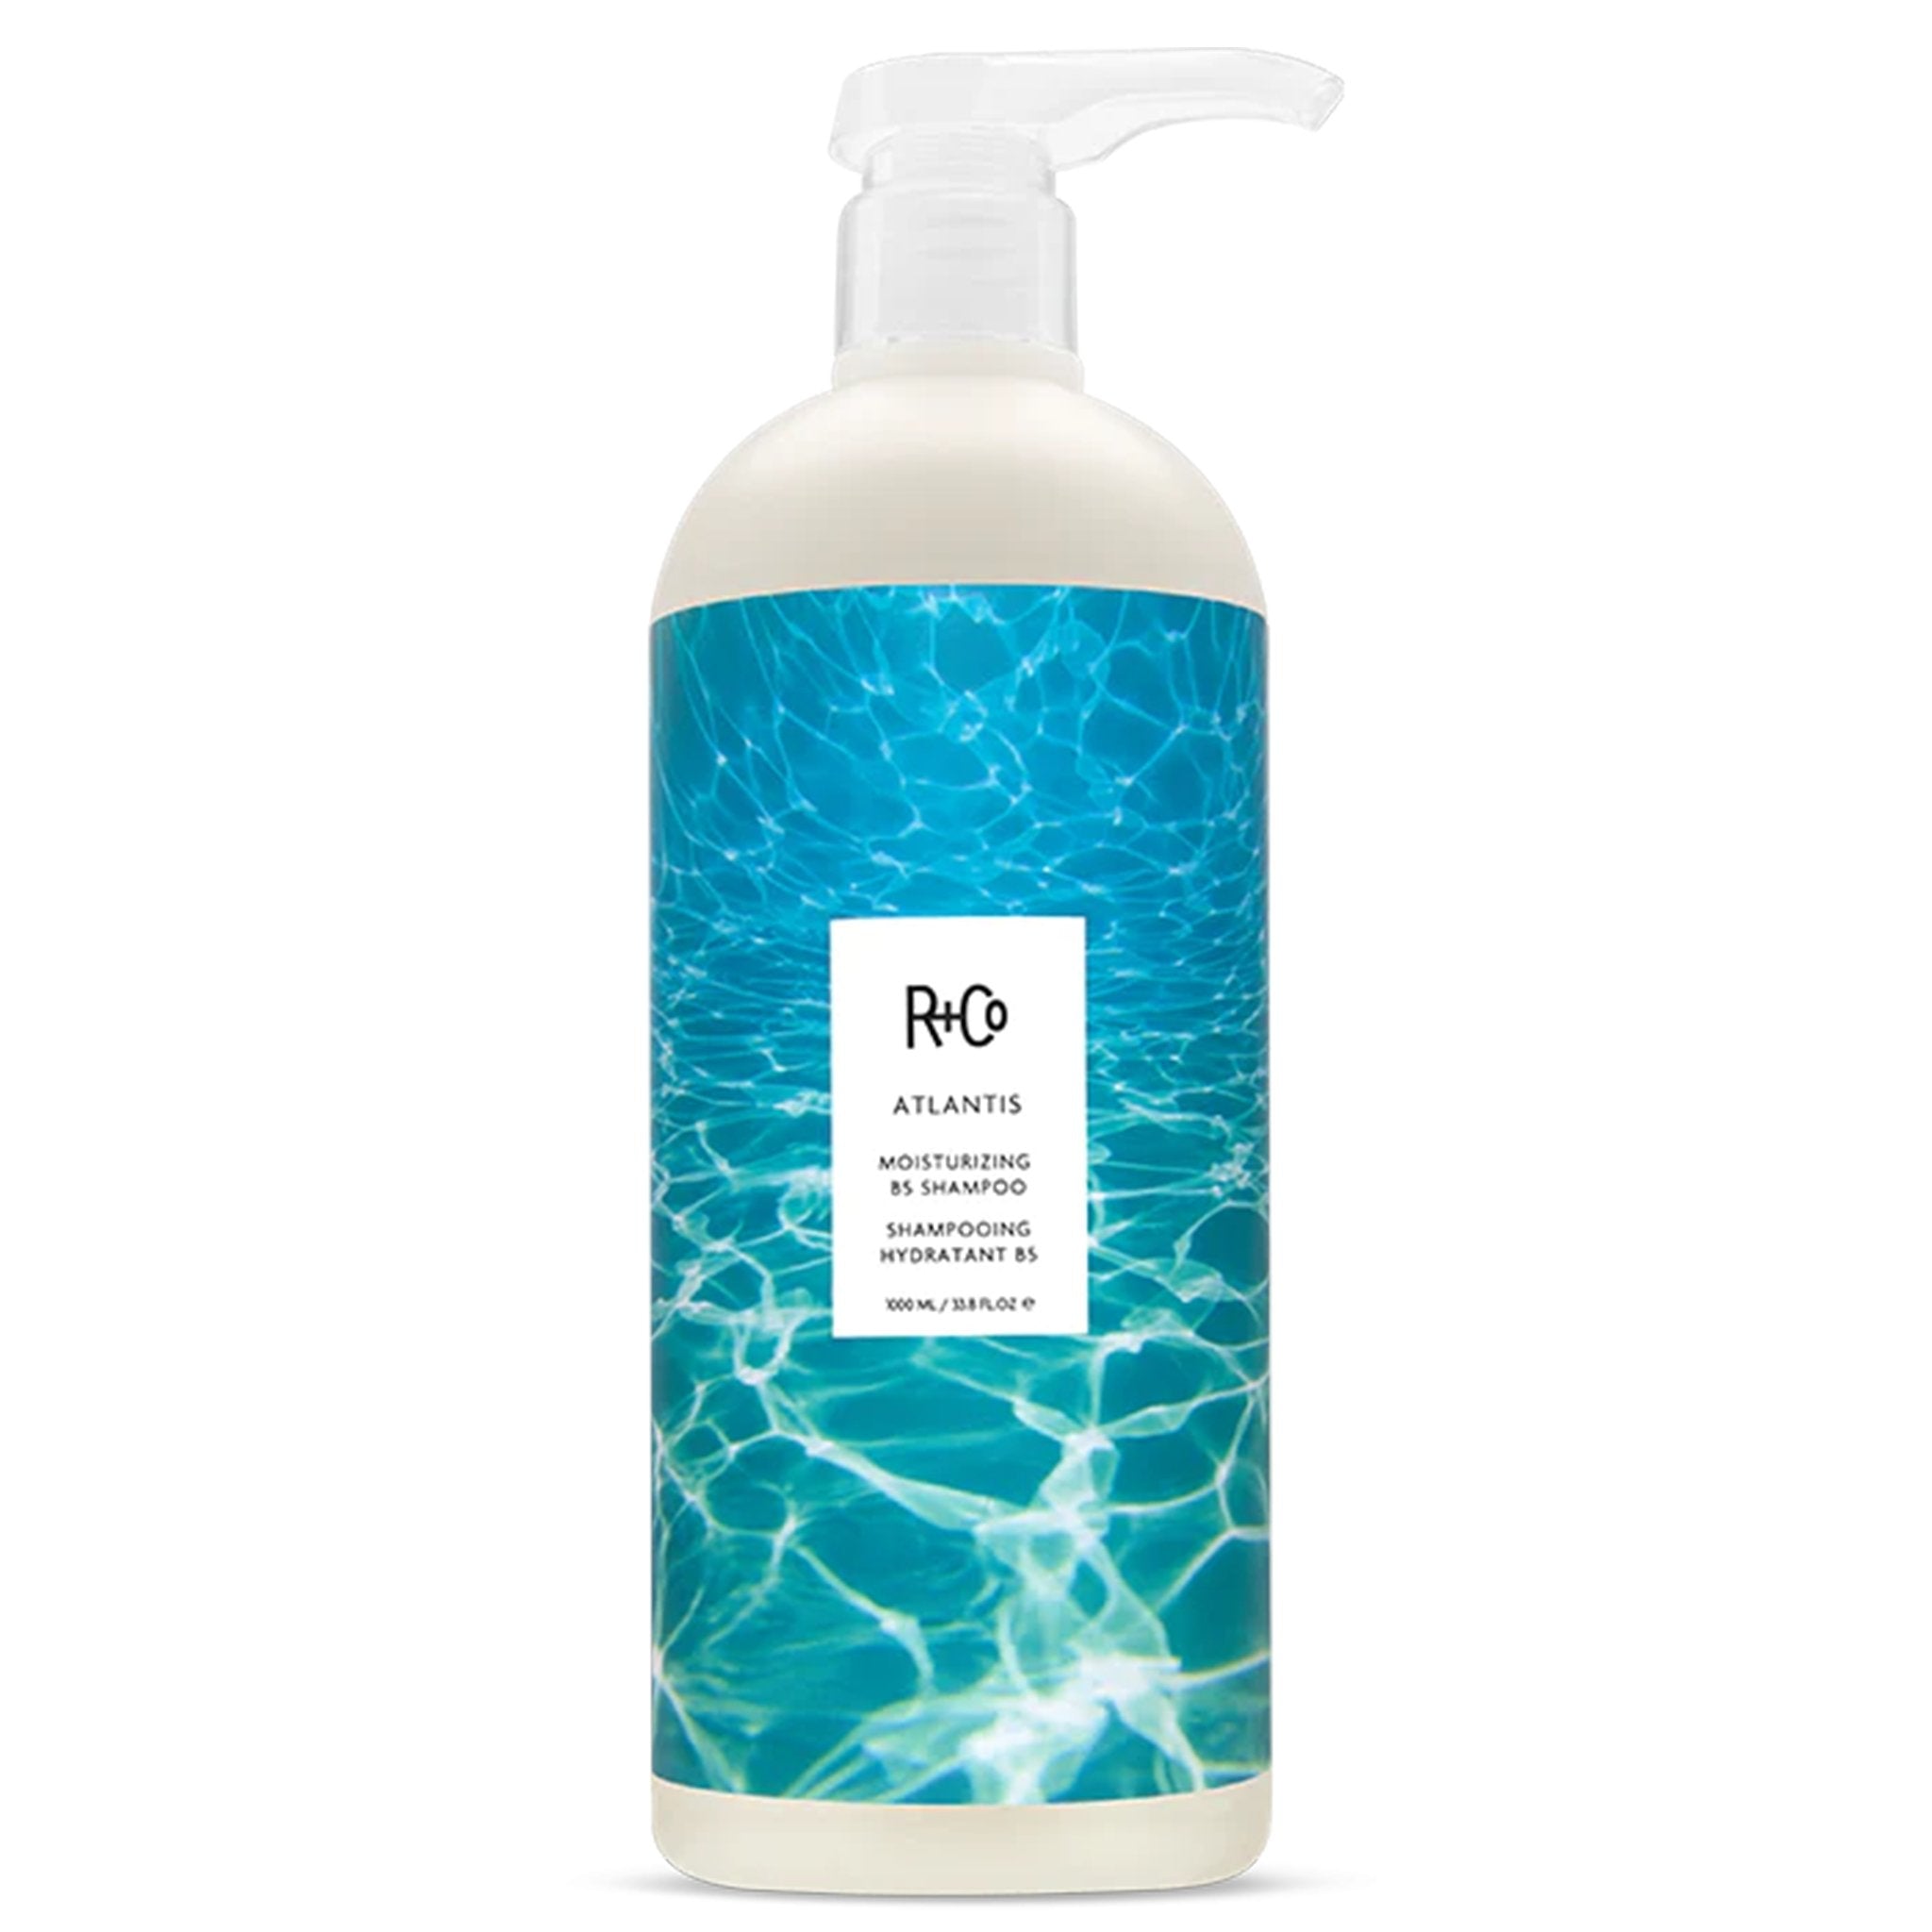 R+Co. Shampoing Hydratant B5 Atlantic - 1000 ml - Concept C. Shop